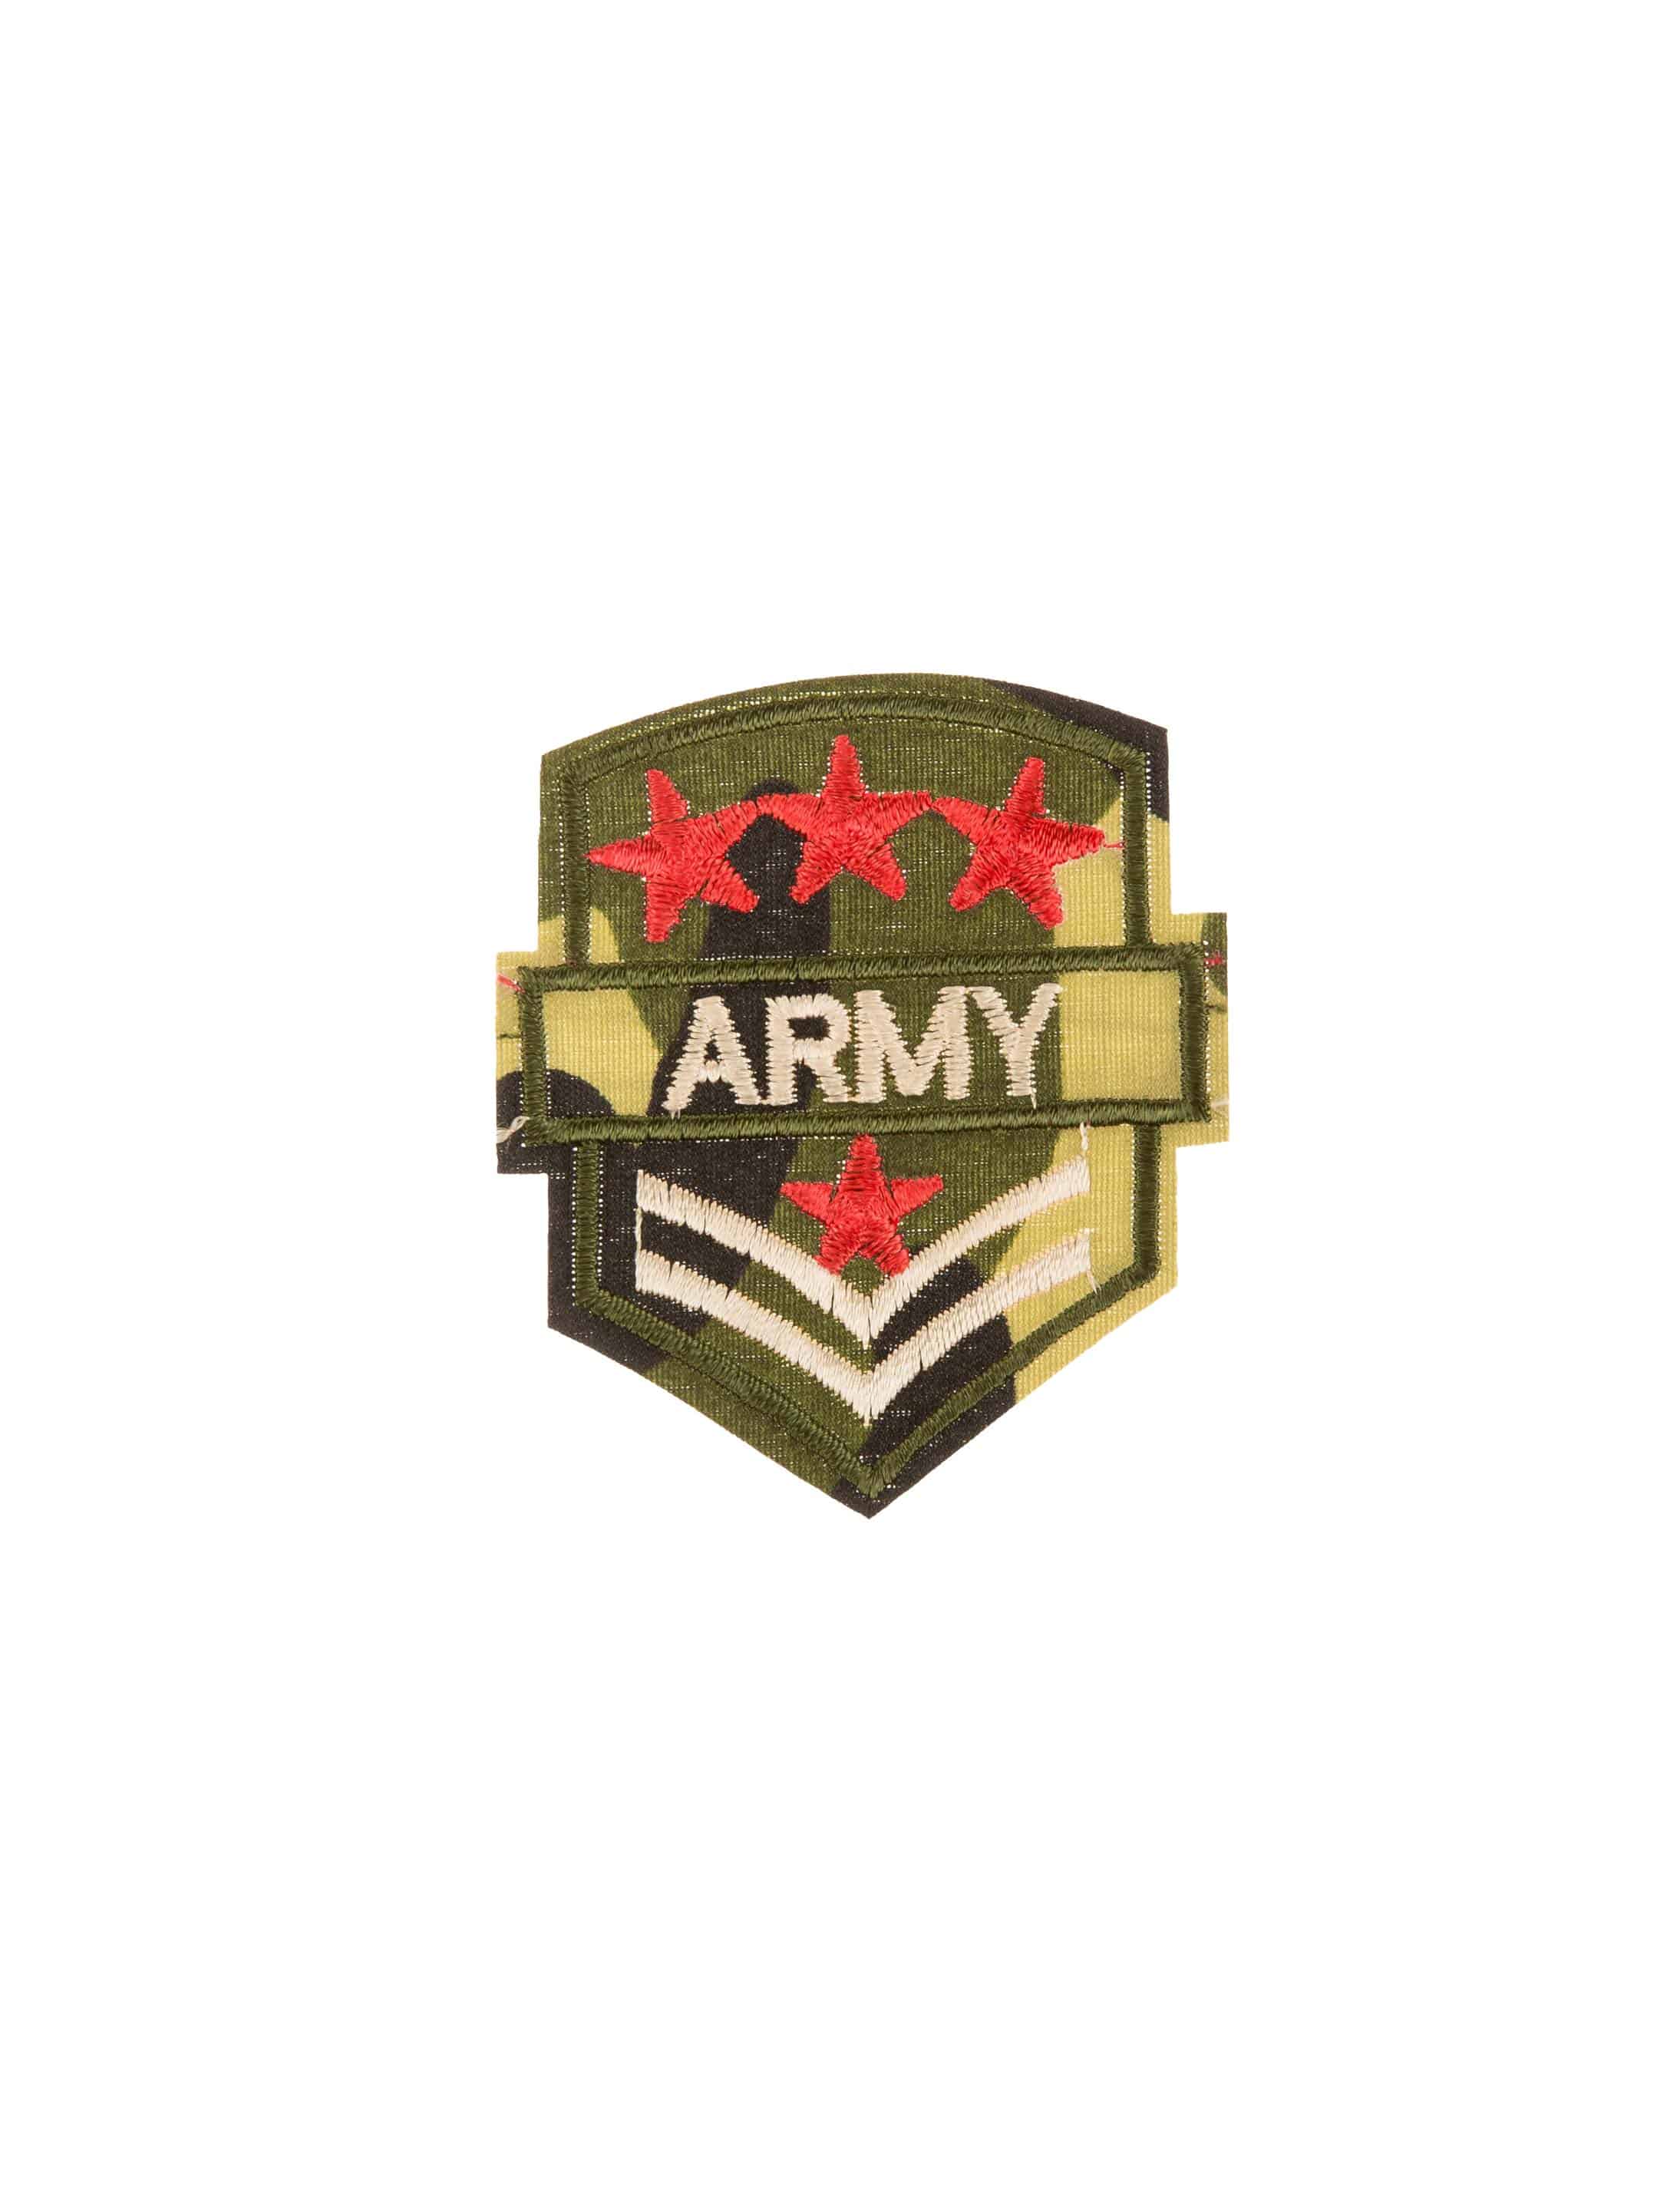 Aufnäher/Bügelbild Army Wappen